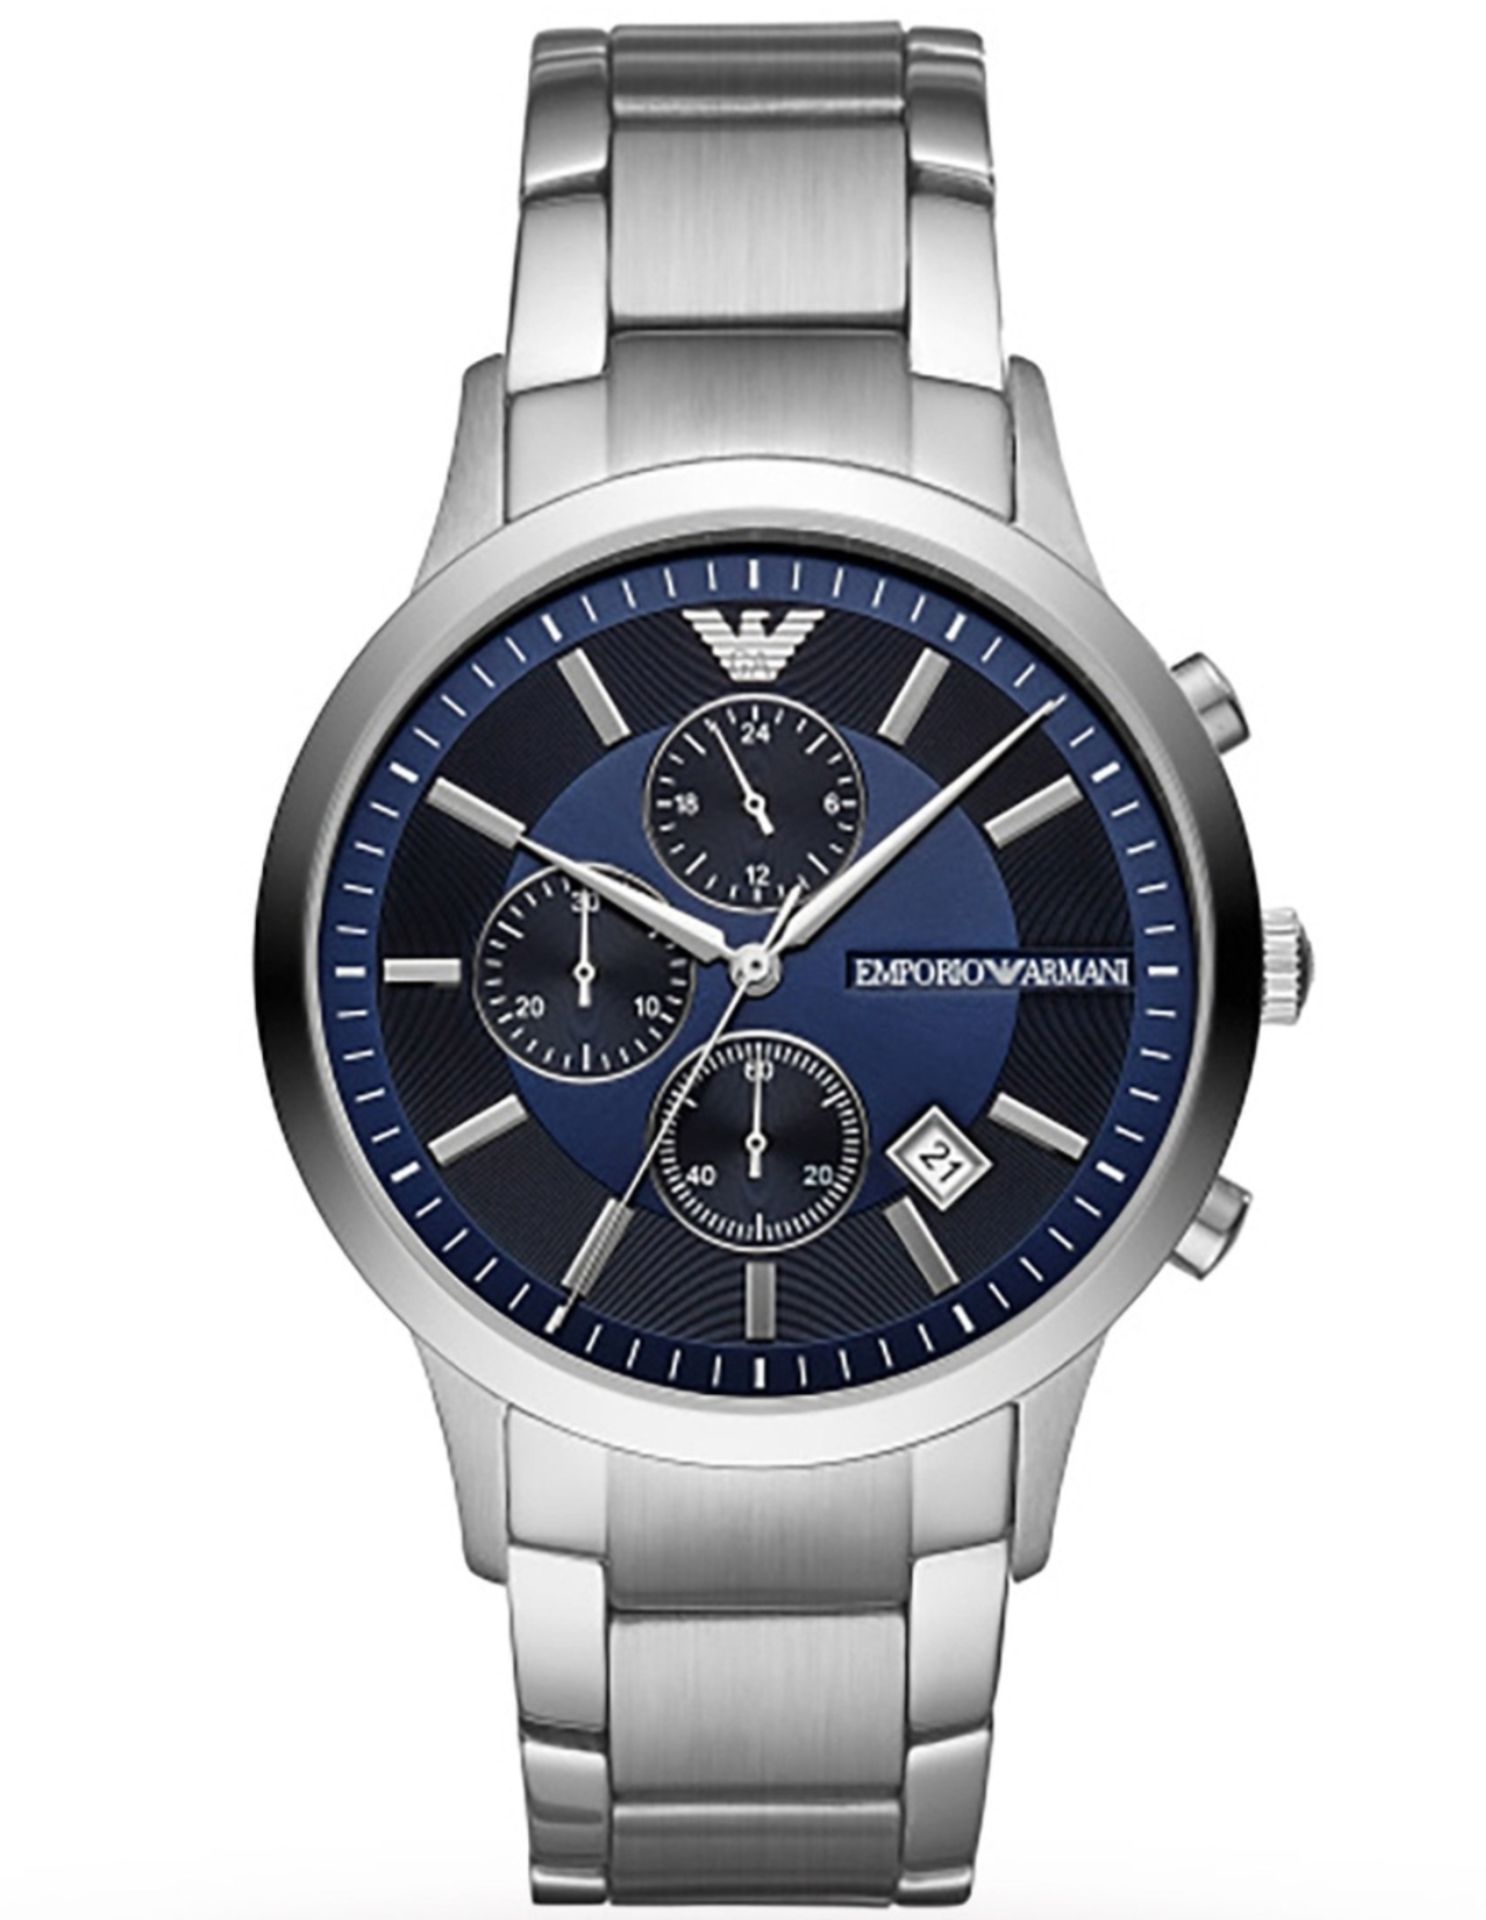 Emporio Armani AR11164 Men's Blue Dial Silver Bracelet Chronograph Watch - Image 3 of 6